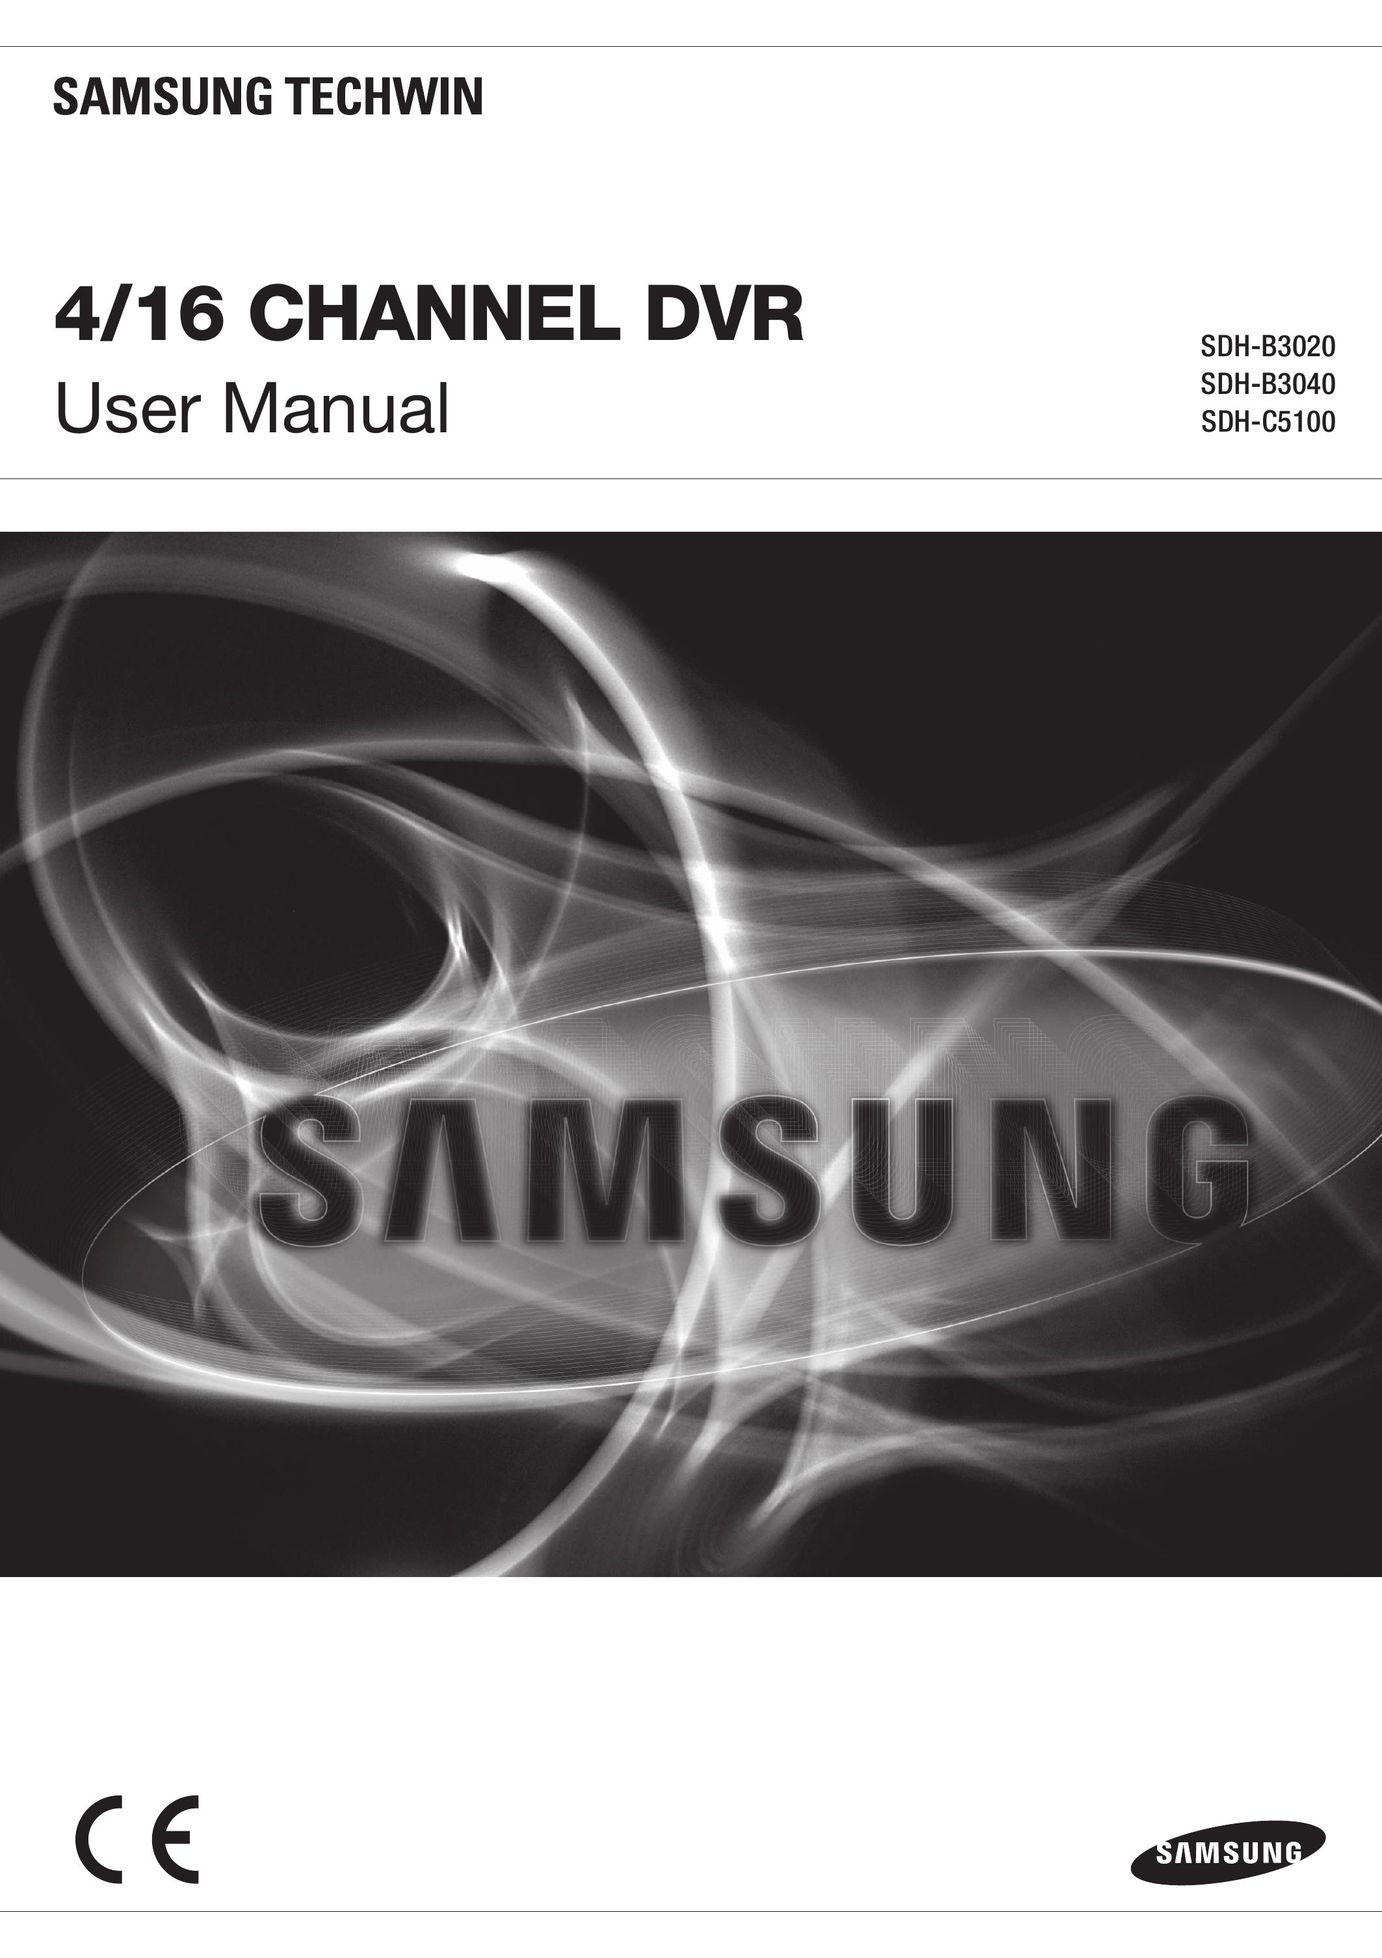 Samsung SDH-B3040 DVR User Manual